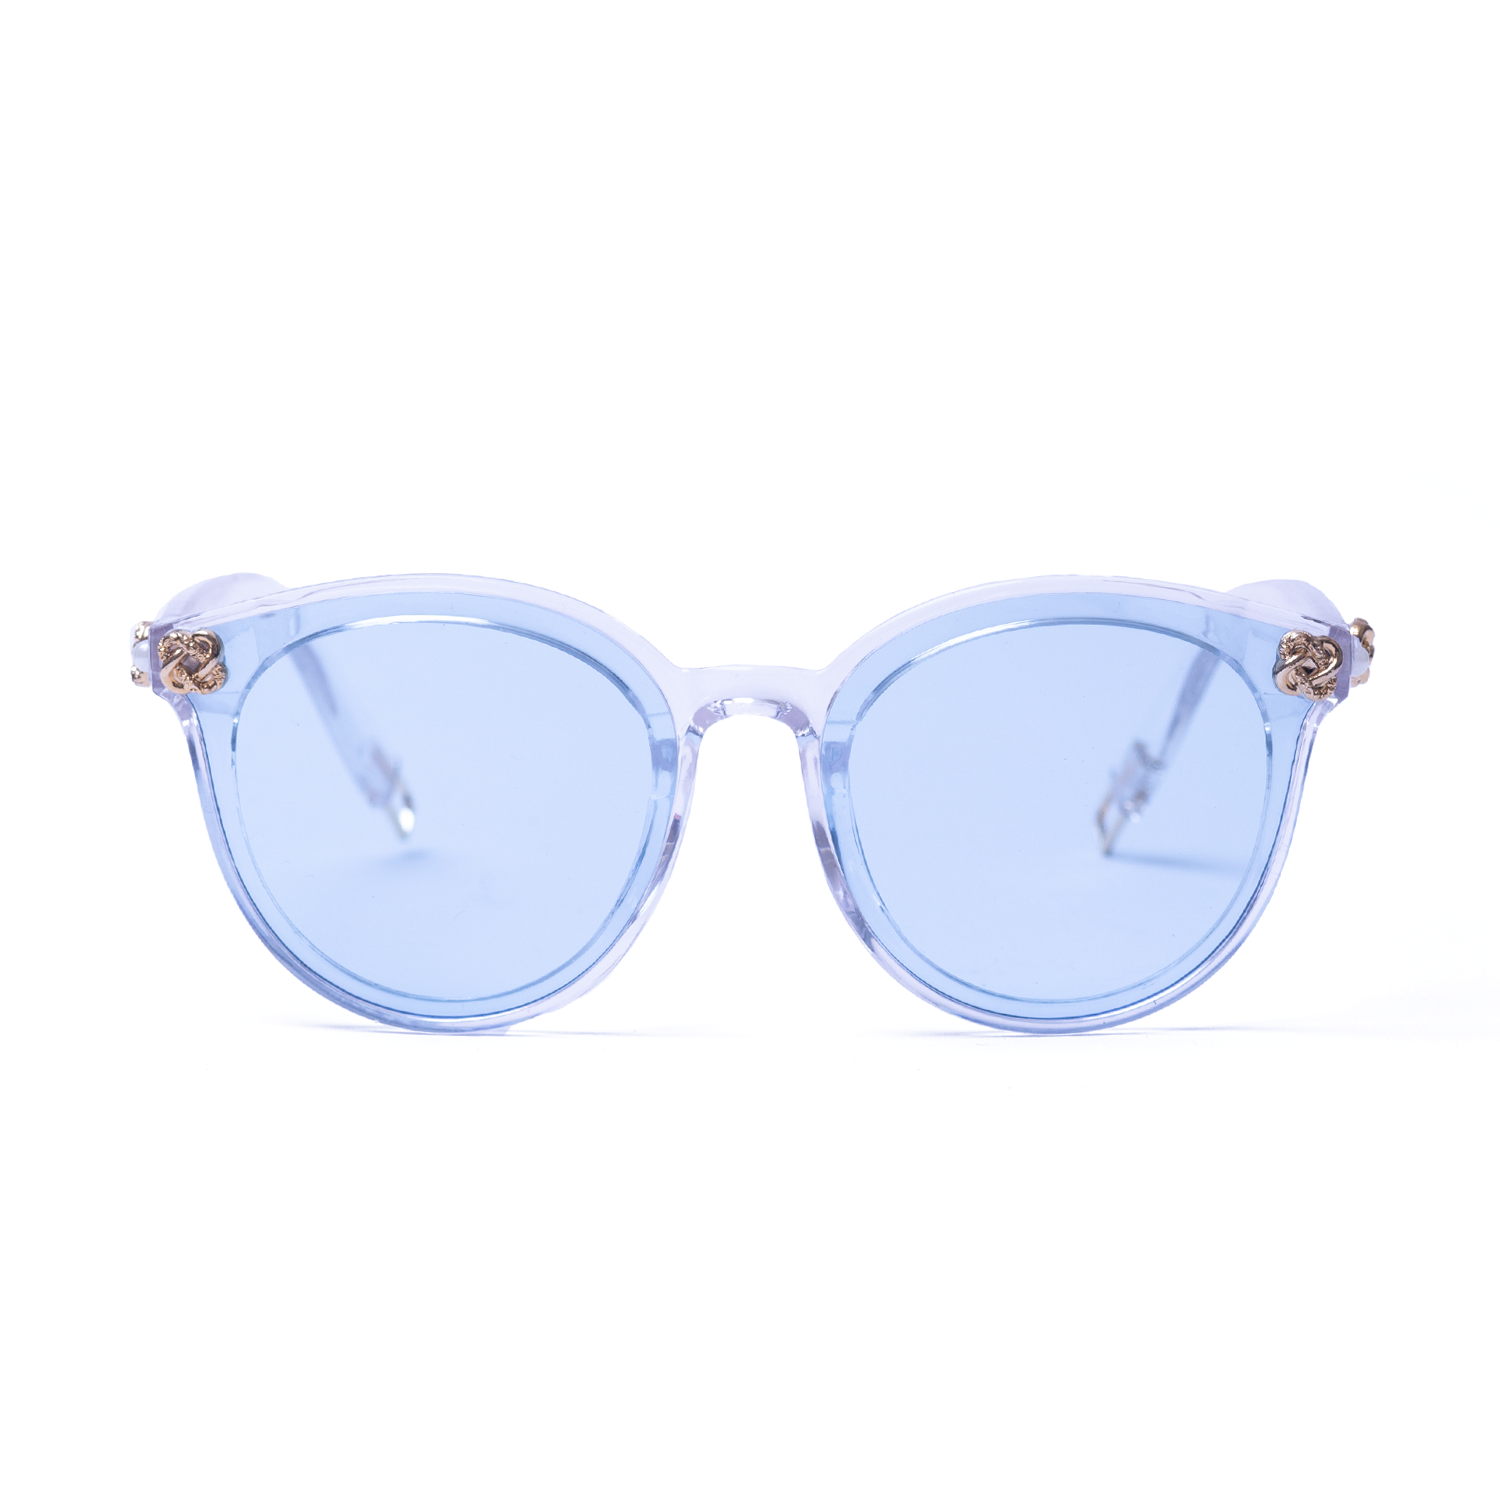 Everyday Summer Blue Berry Eyewear Sunglasses Collection, Tnemnroda man- NRODA